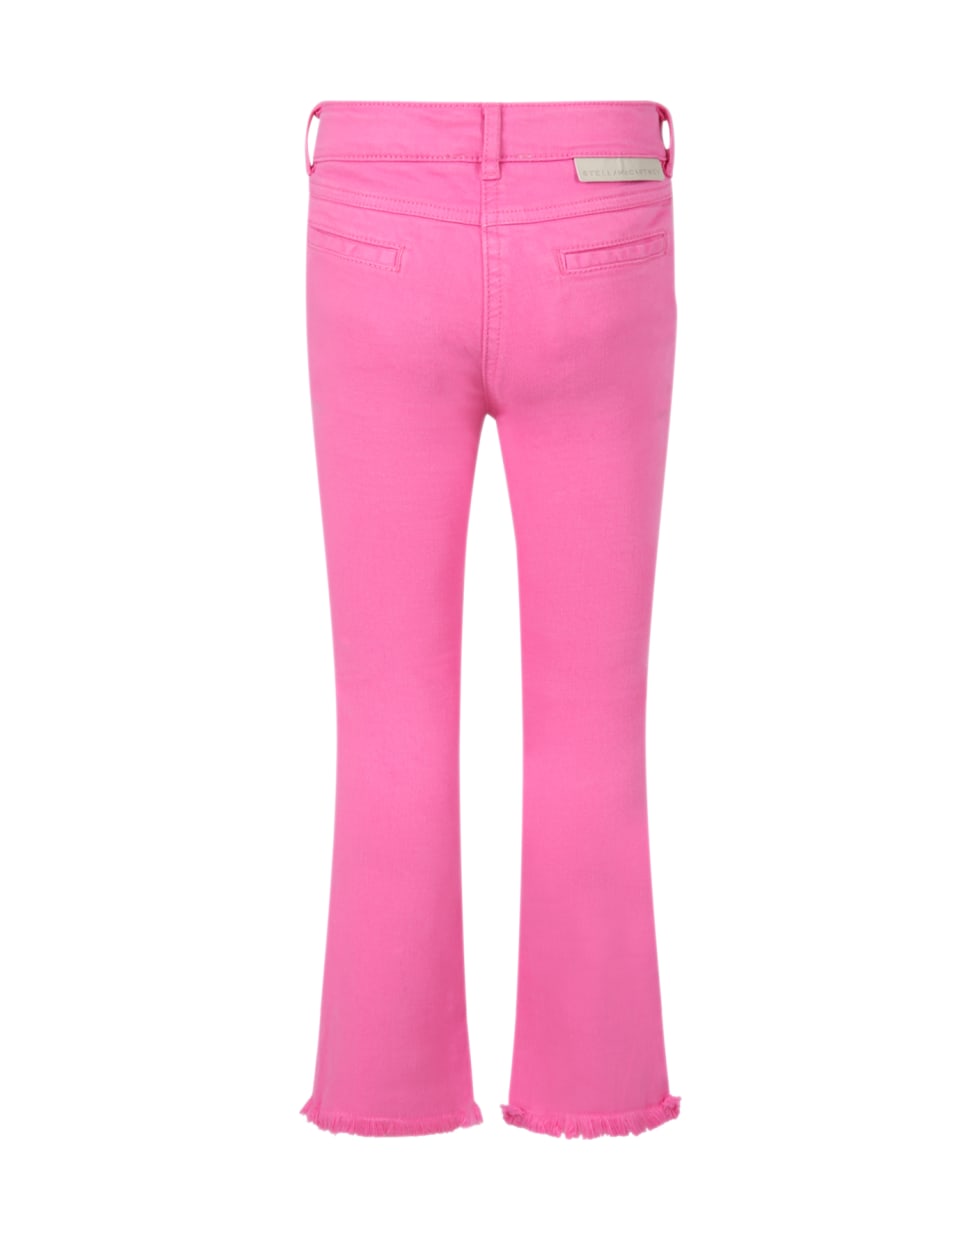 Stella McCartney Kids Fuchsia Jeans For Girl With Patch Logo - Fuchsia